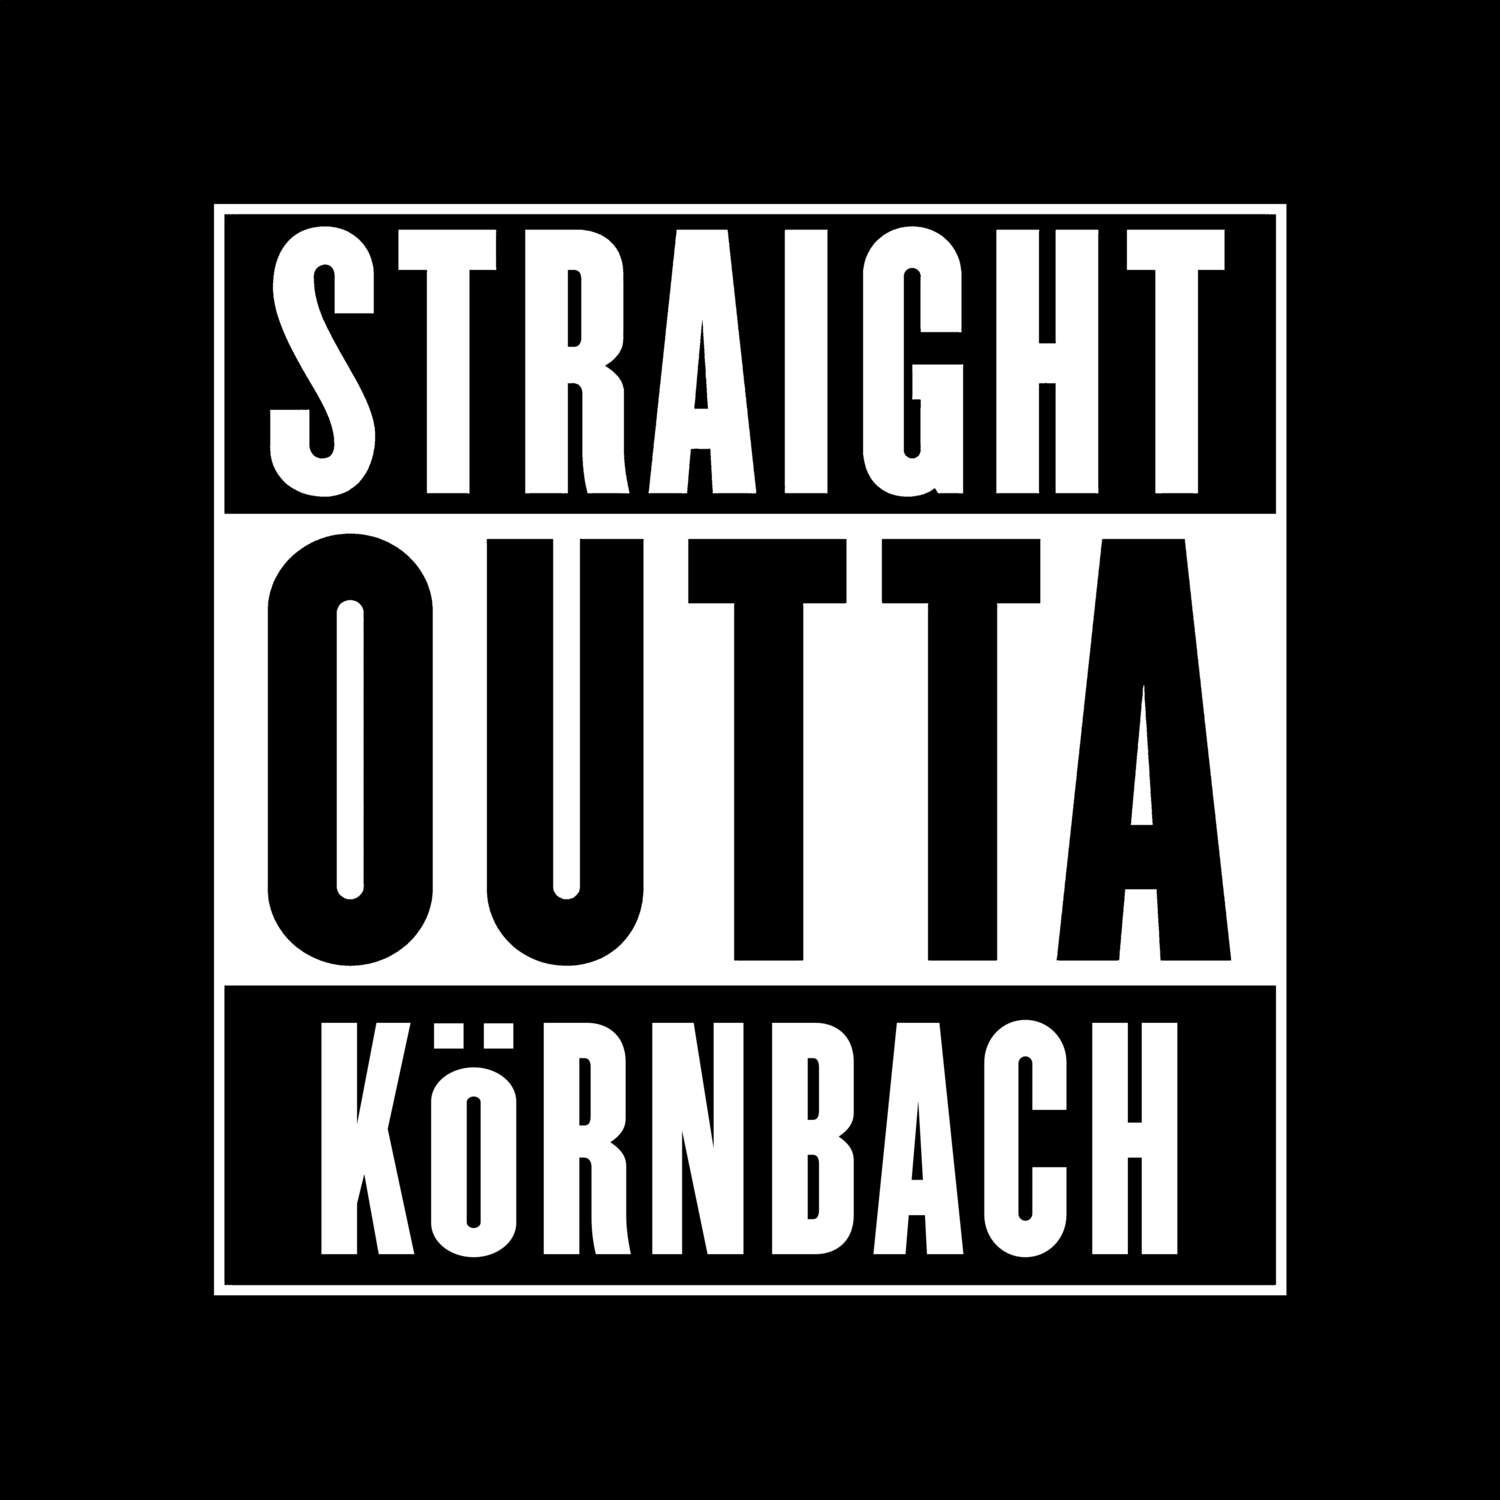 Körnbach T-Shirt »Straight Outta«